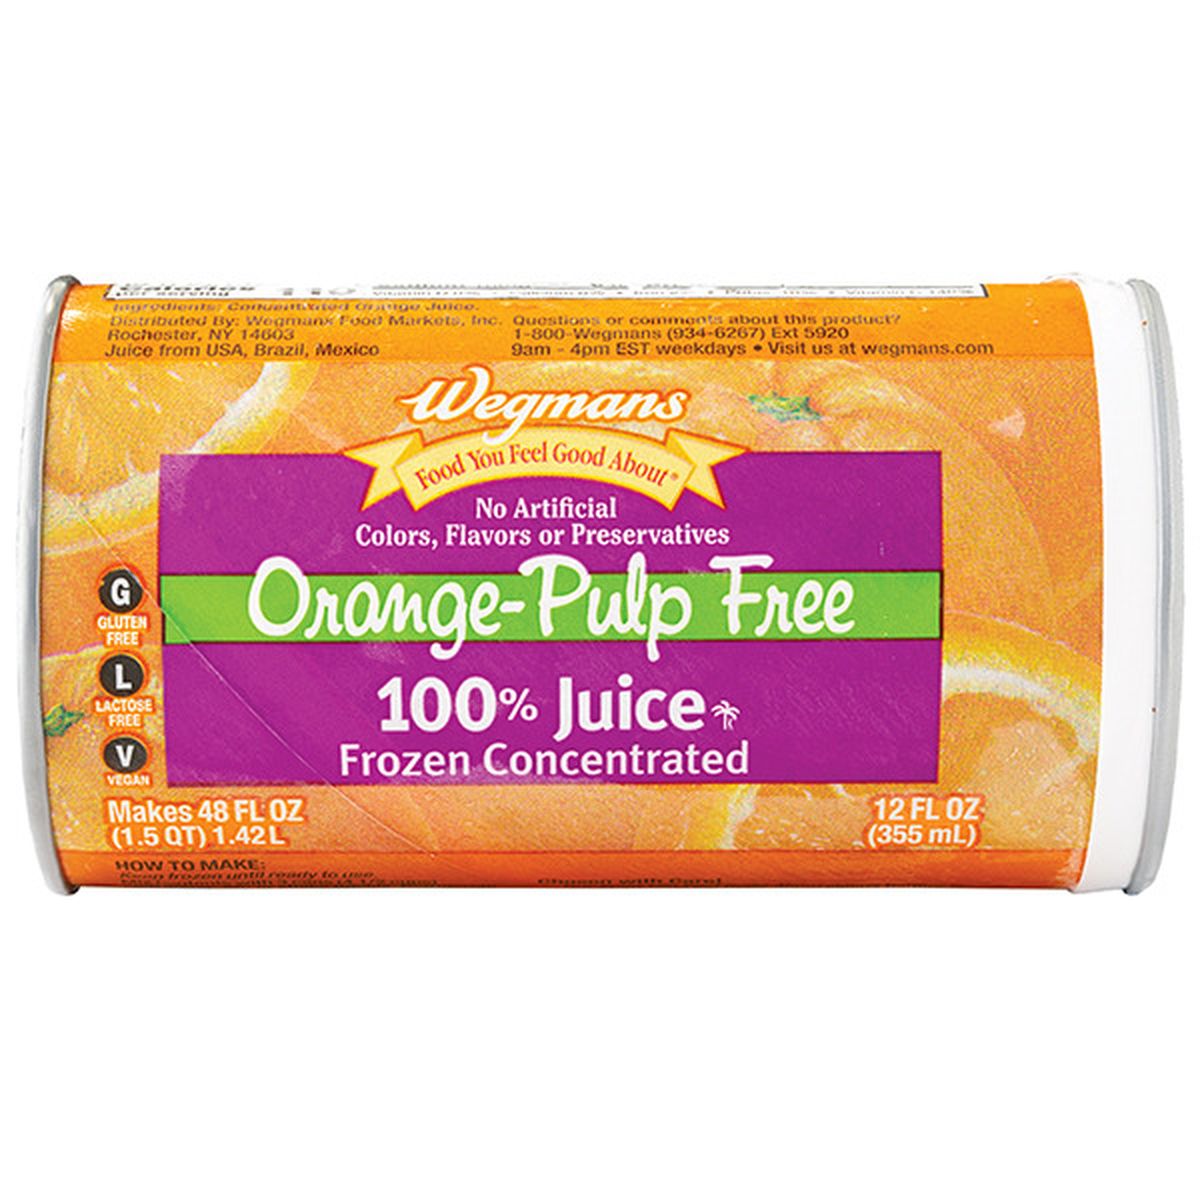 Calories in Wegmans 100% Juice, Orange-Pulp Free, Frozen Concentrated